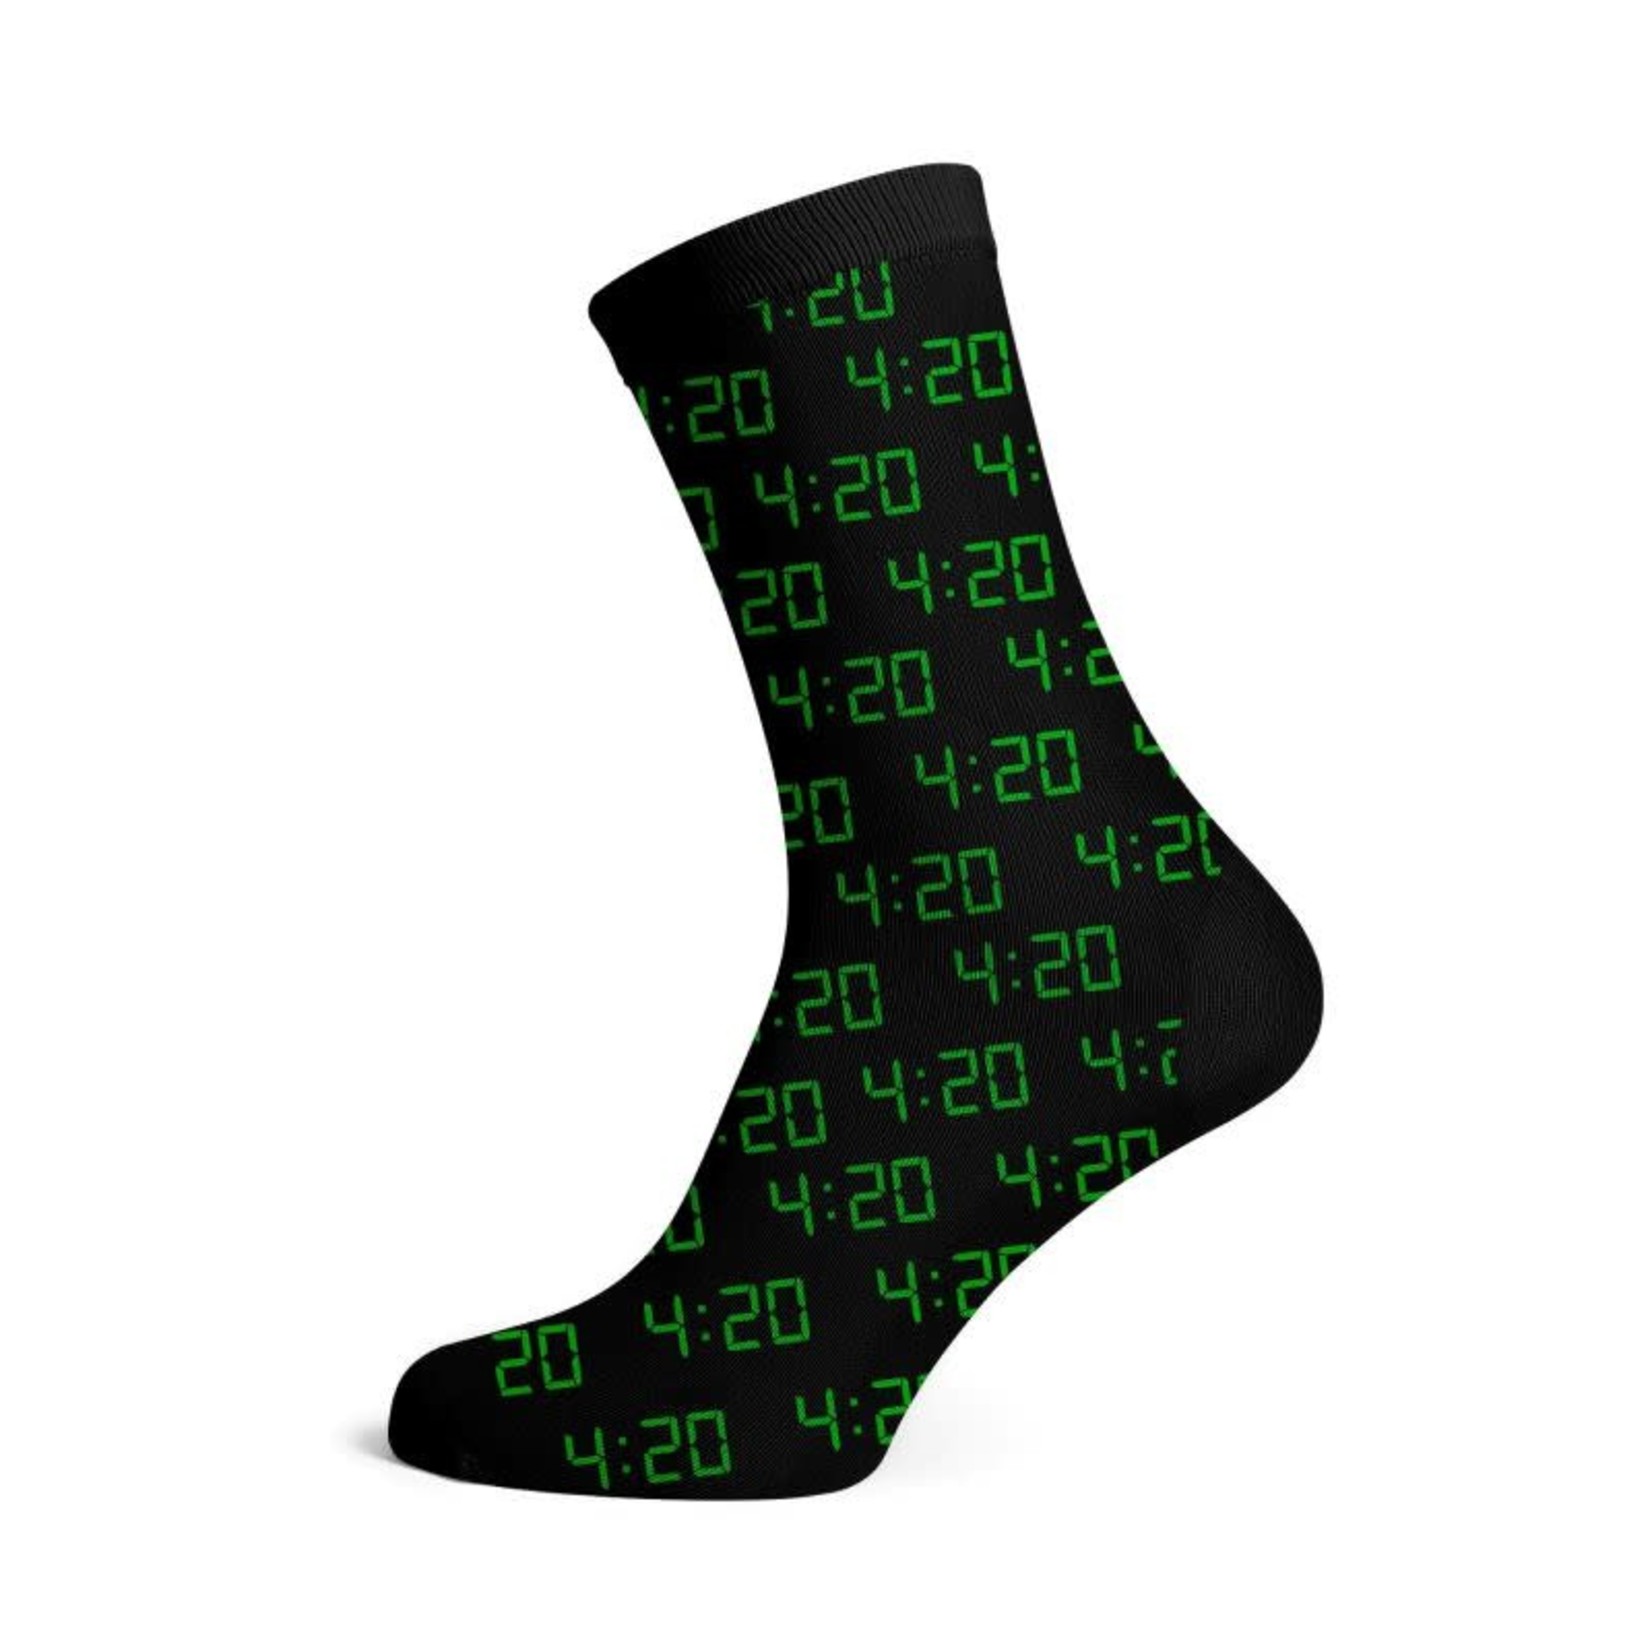 Socks 4:20 Green